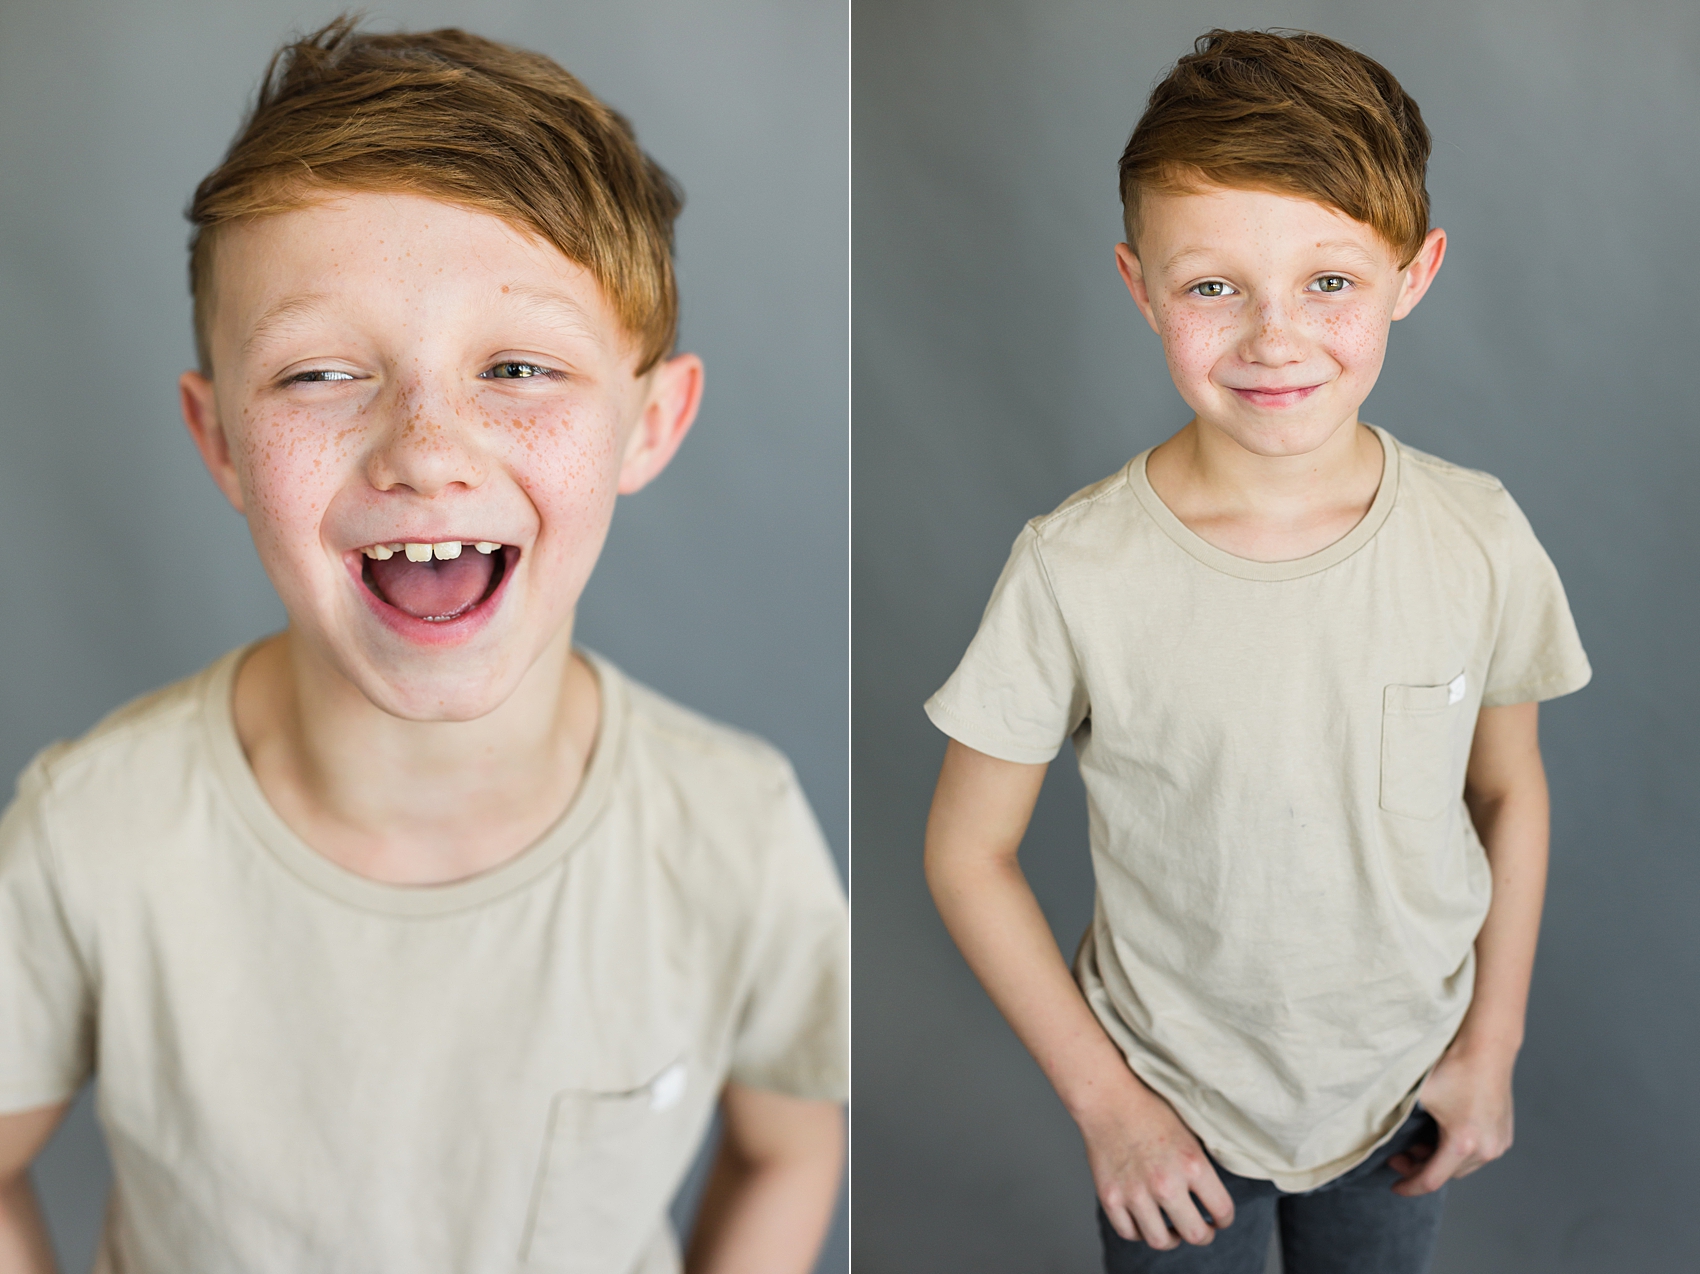 Leah Hope Photography | Downtown Phoenix Blok Studio | Phoenix Scottsdale Arizona Photographer | Head Shots Child Actor | Modeling Portraits | Classic Plain Background Head Shots for Children | What to Wear